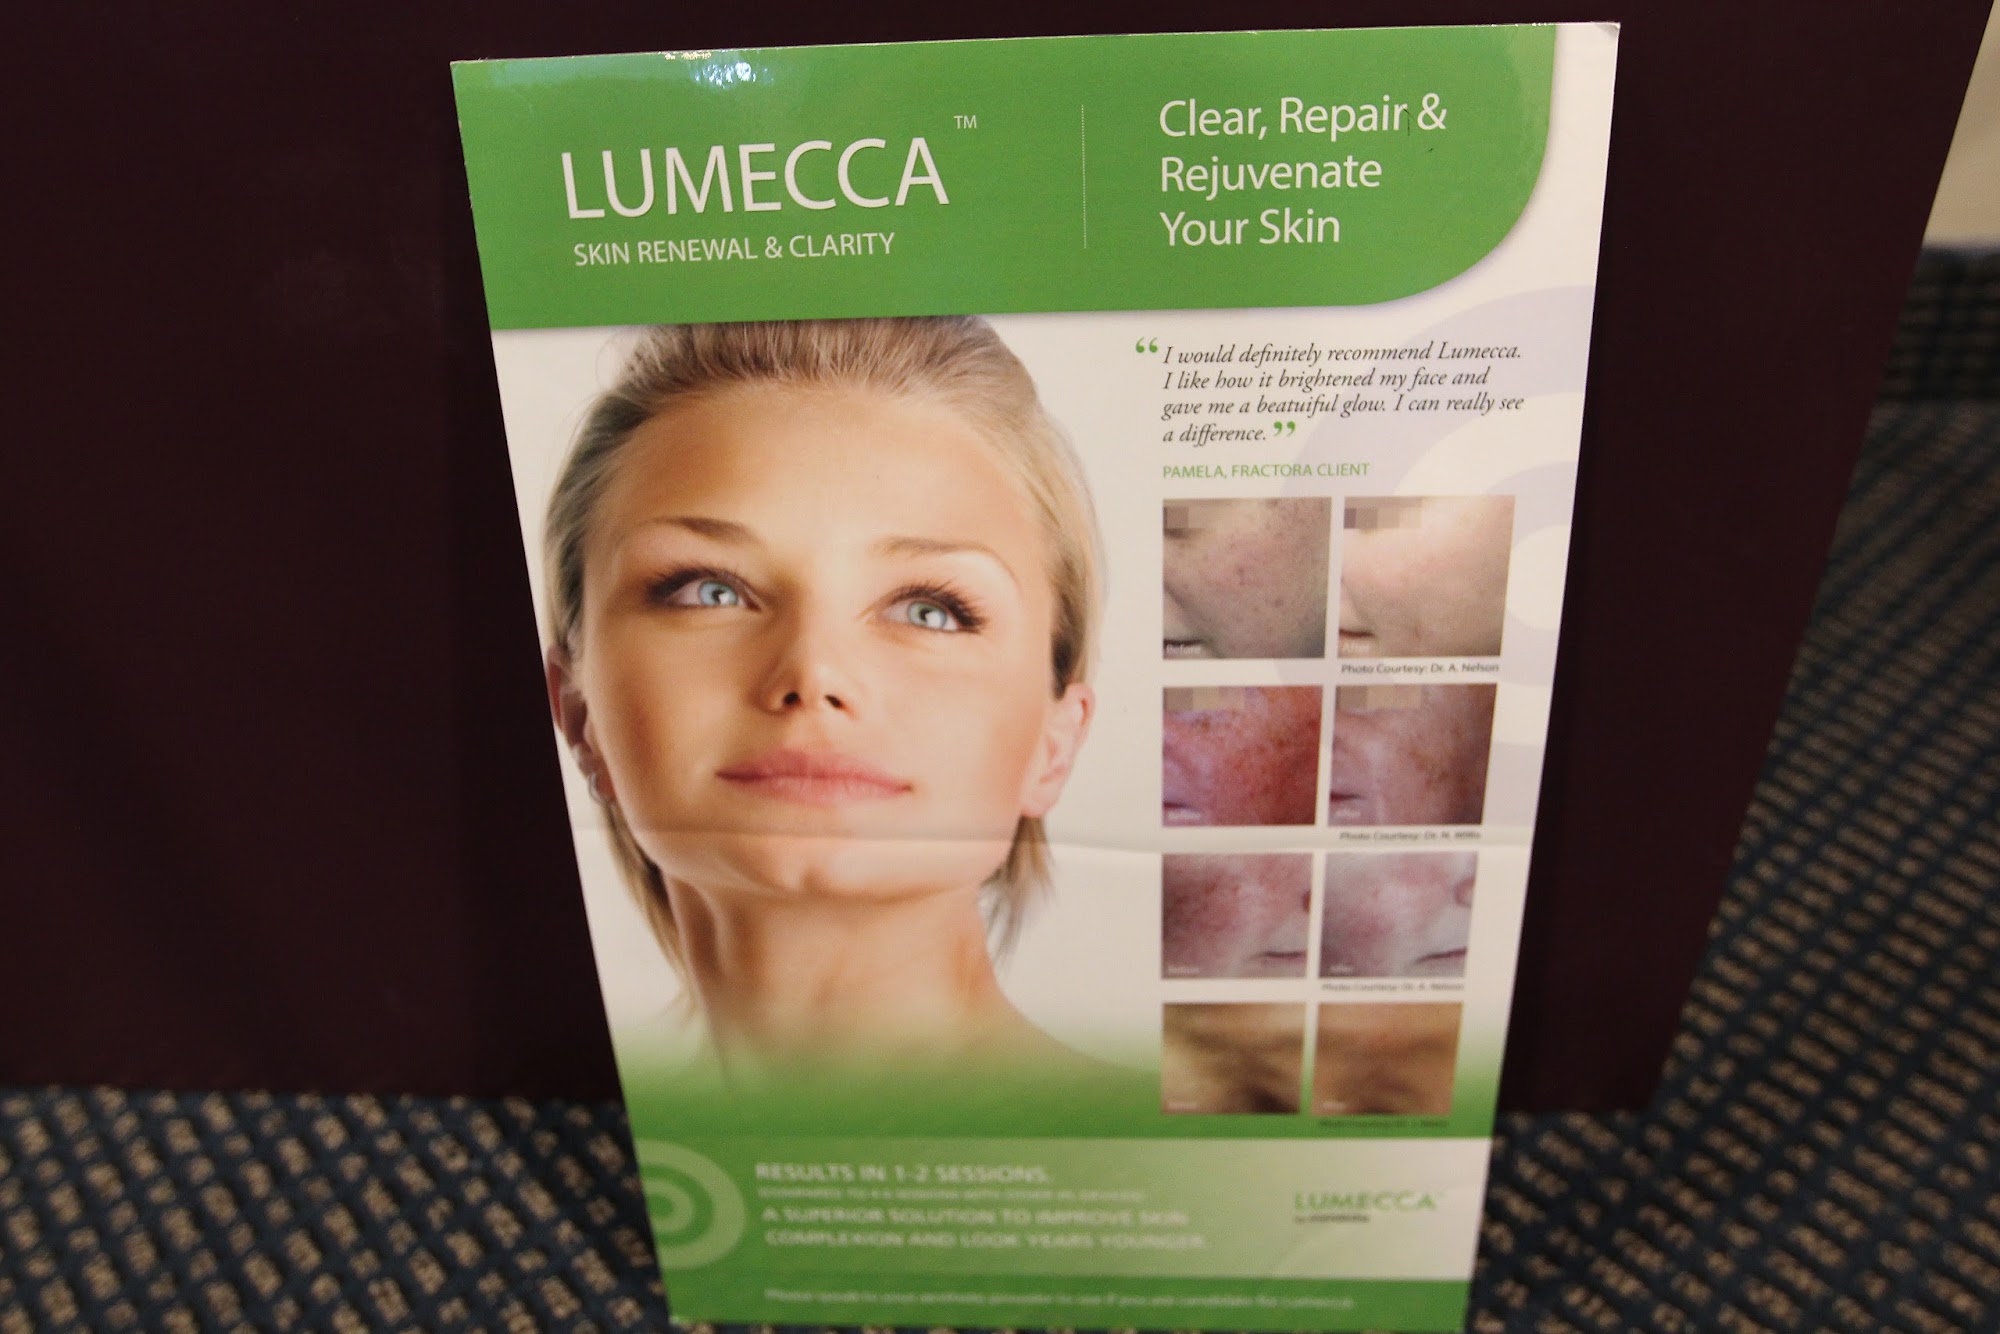 Advanced Dermatology and Cosmetic Surgery - White Oak 1220 Lincoln Way # 101, White Oak Pennsylvania 15131